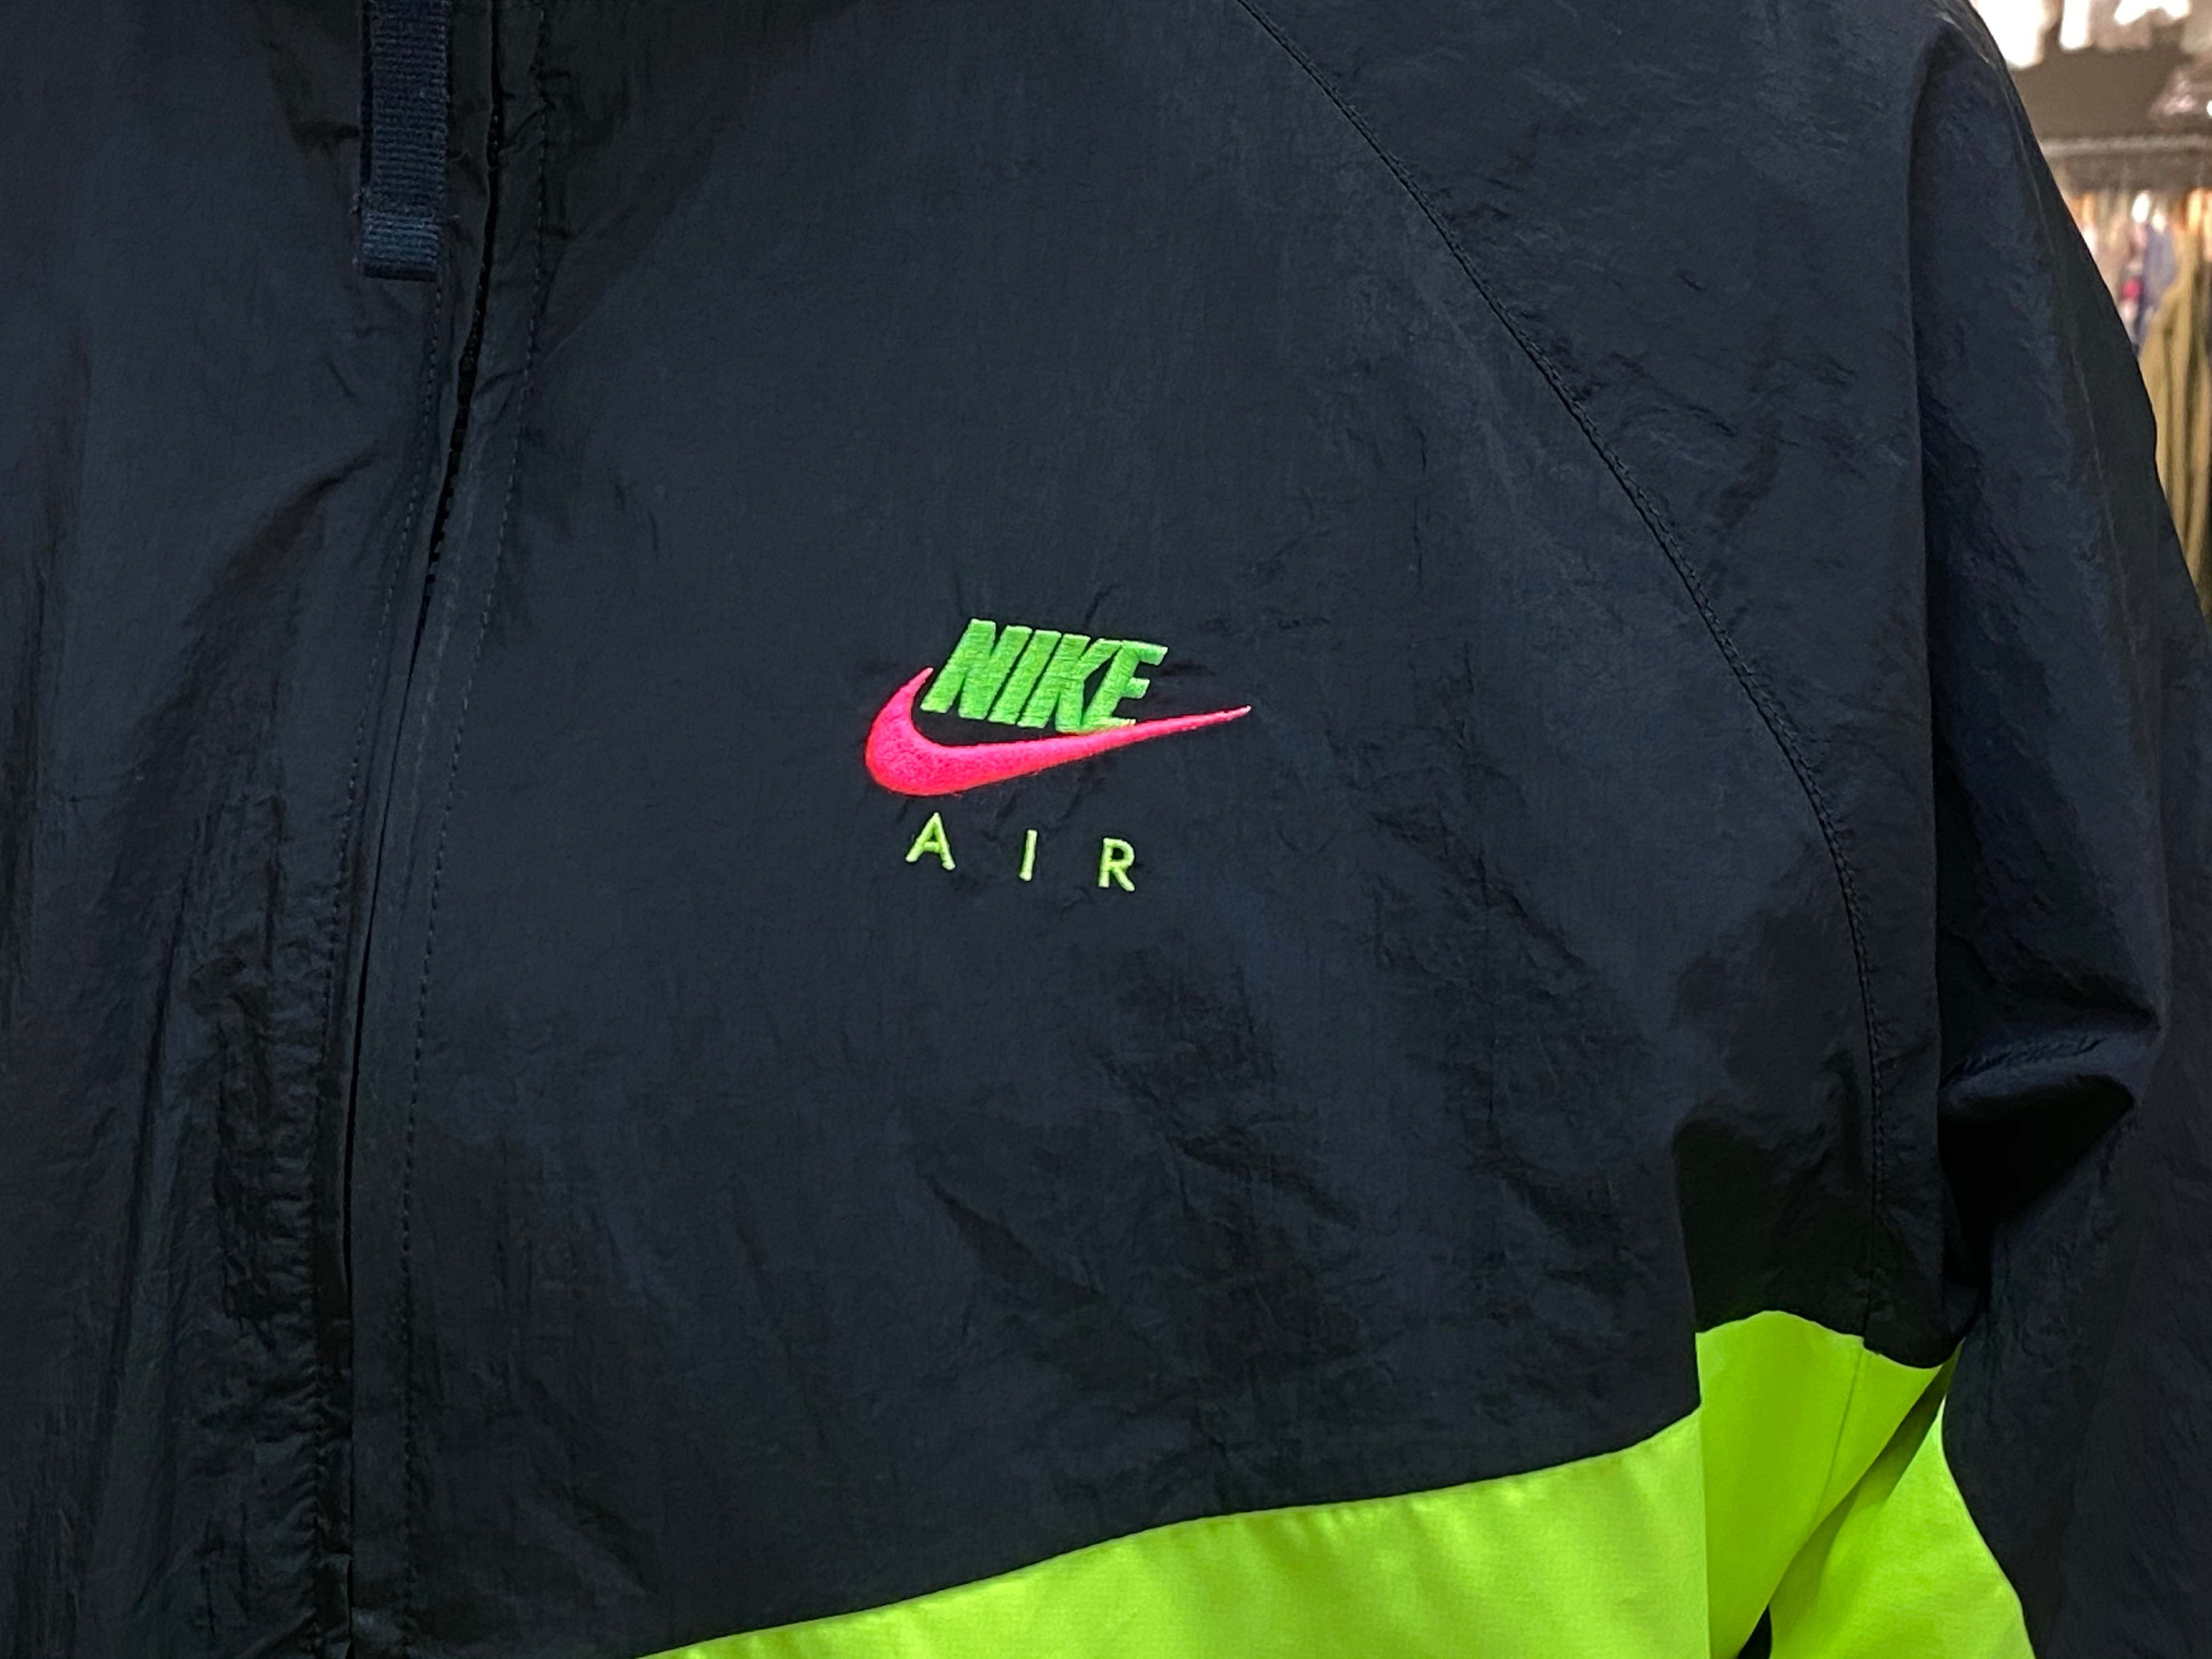 Lサイズ 新品 Nike City Neon Hbr Woven Jacket